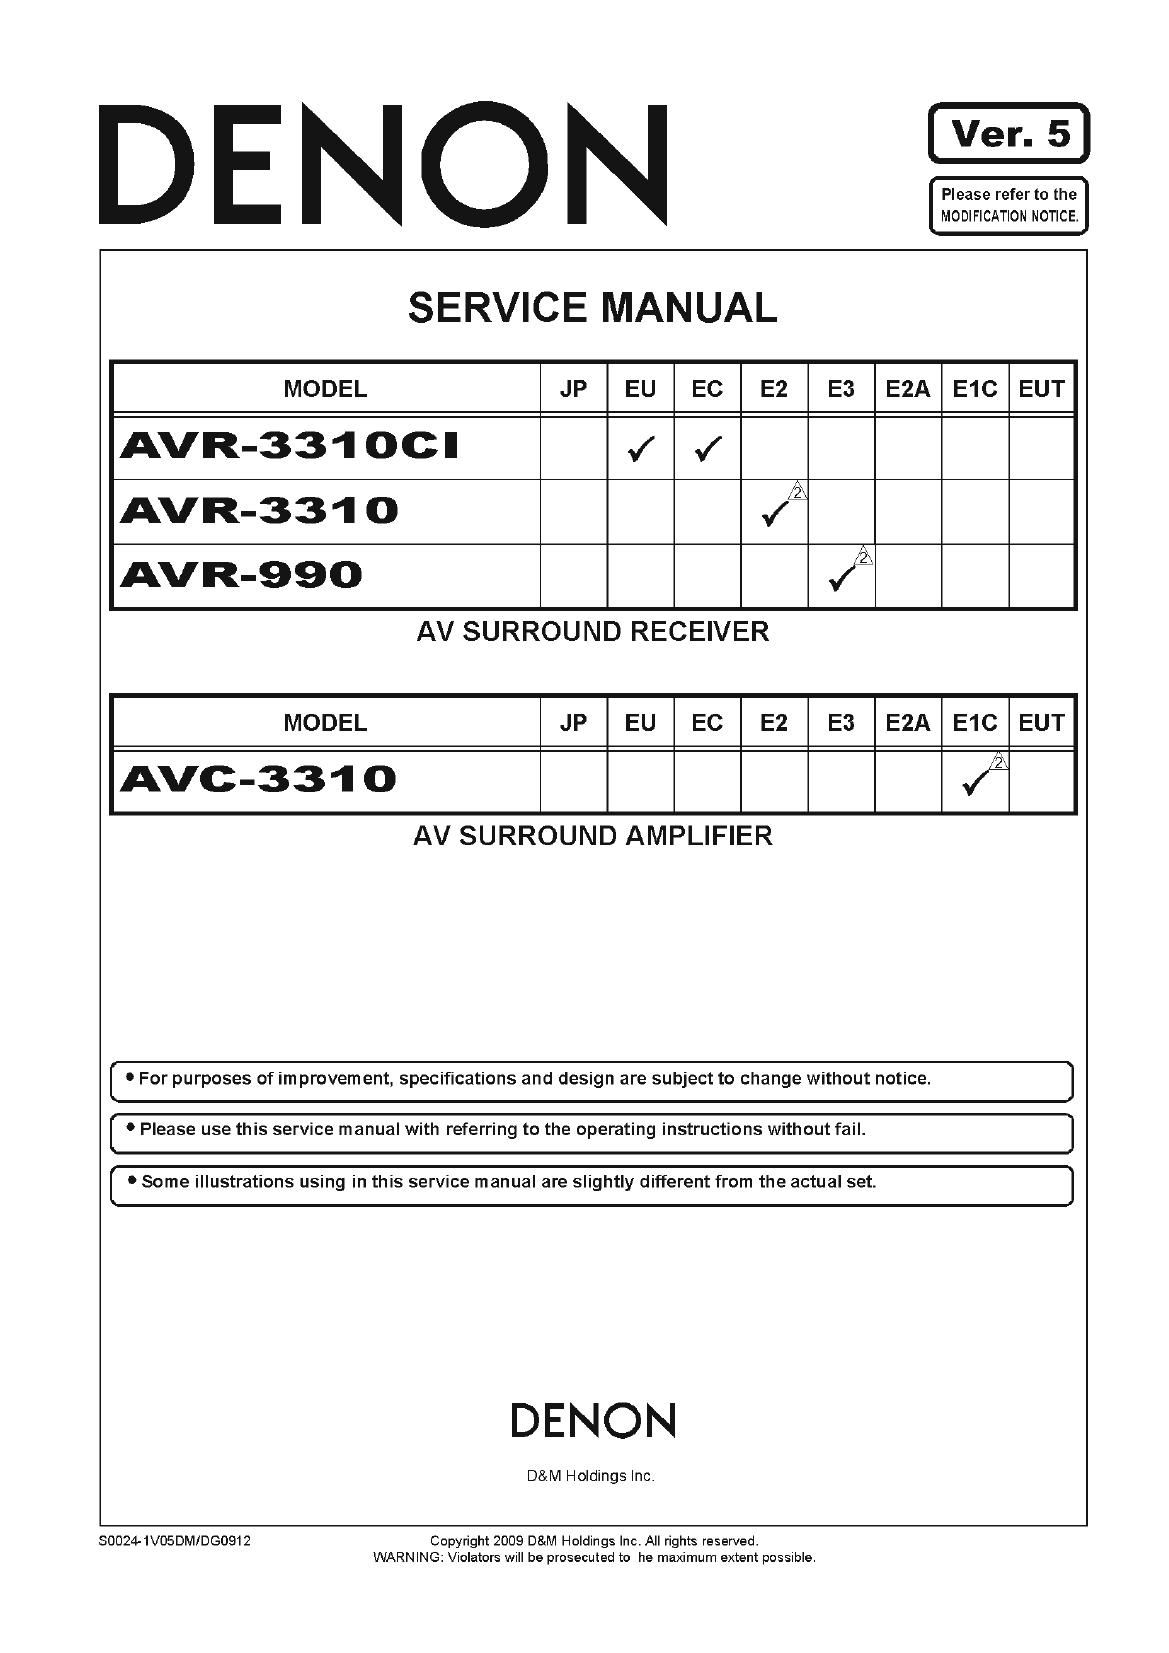 Denon AVR 3310 Service Manual